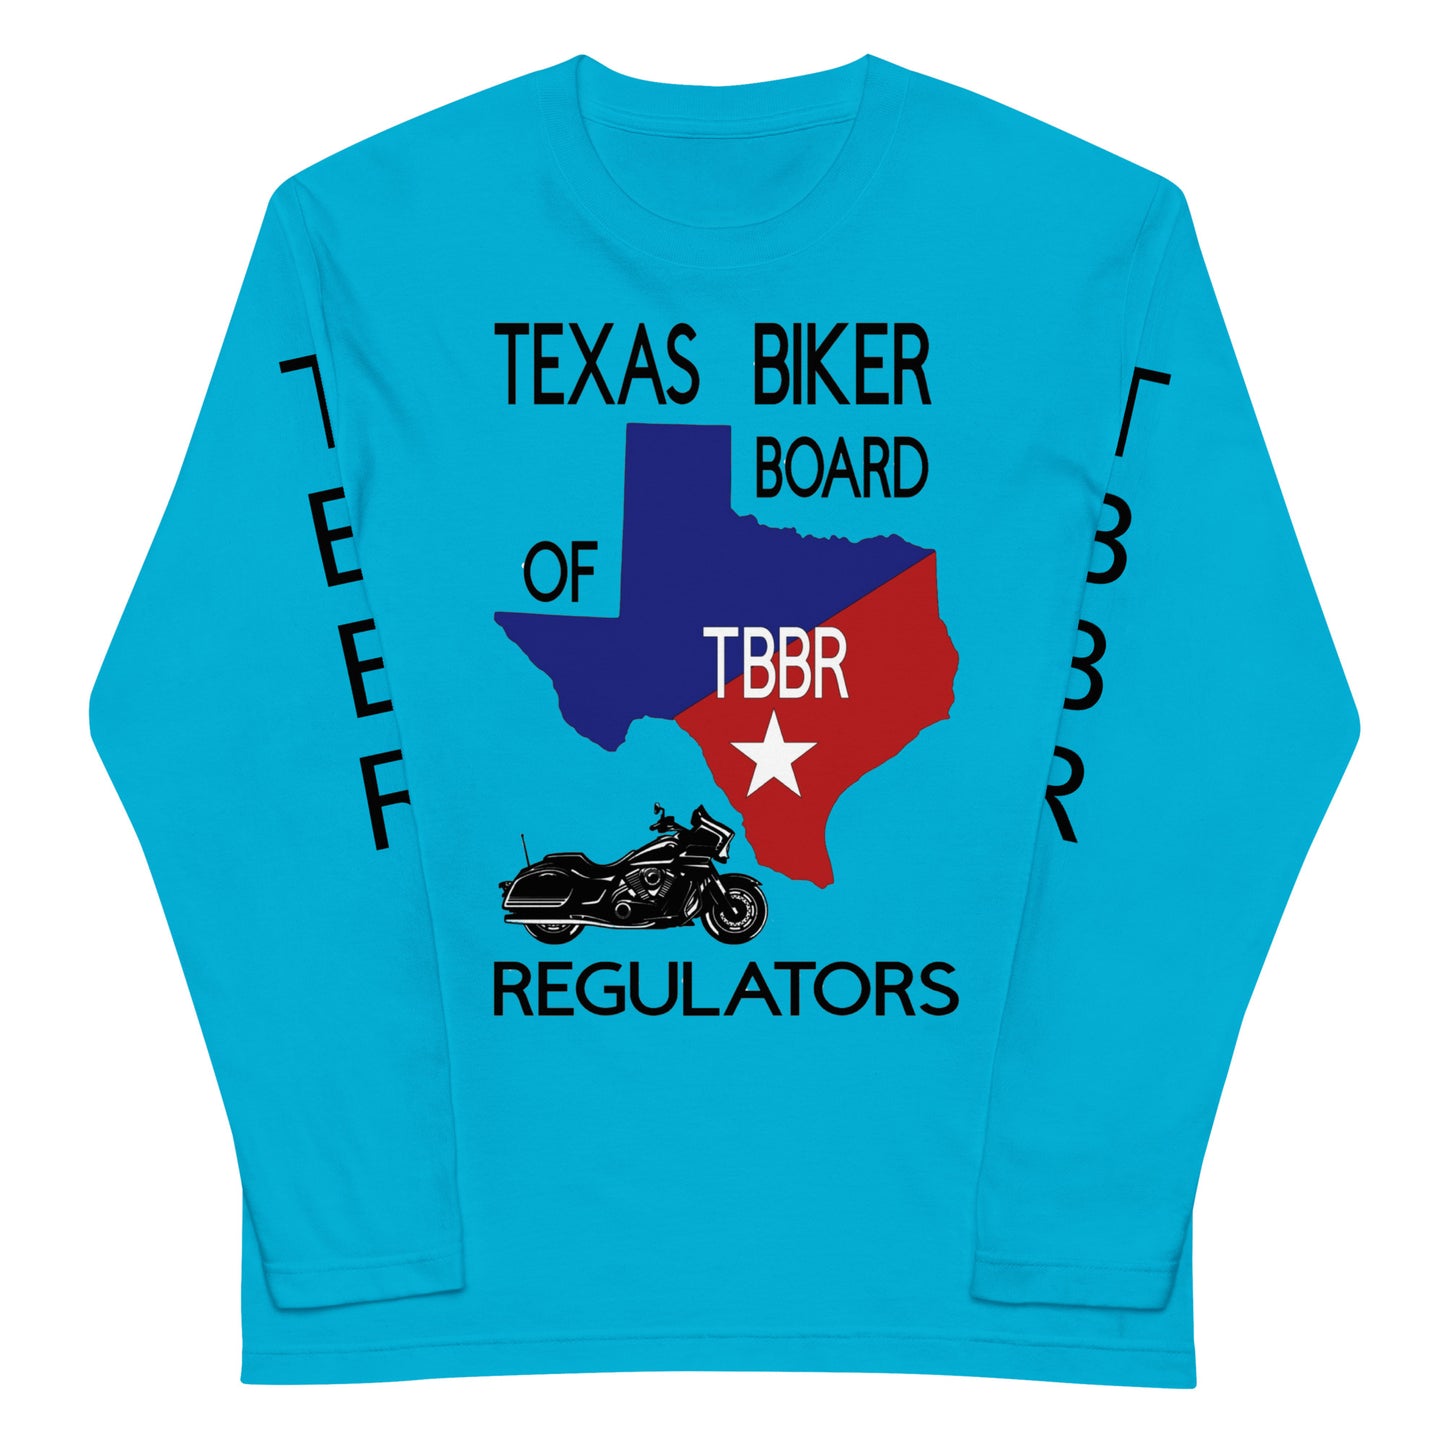 TBBR Long Sleeve Shirt (vertical text)- Unisex